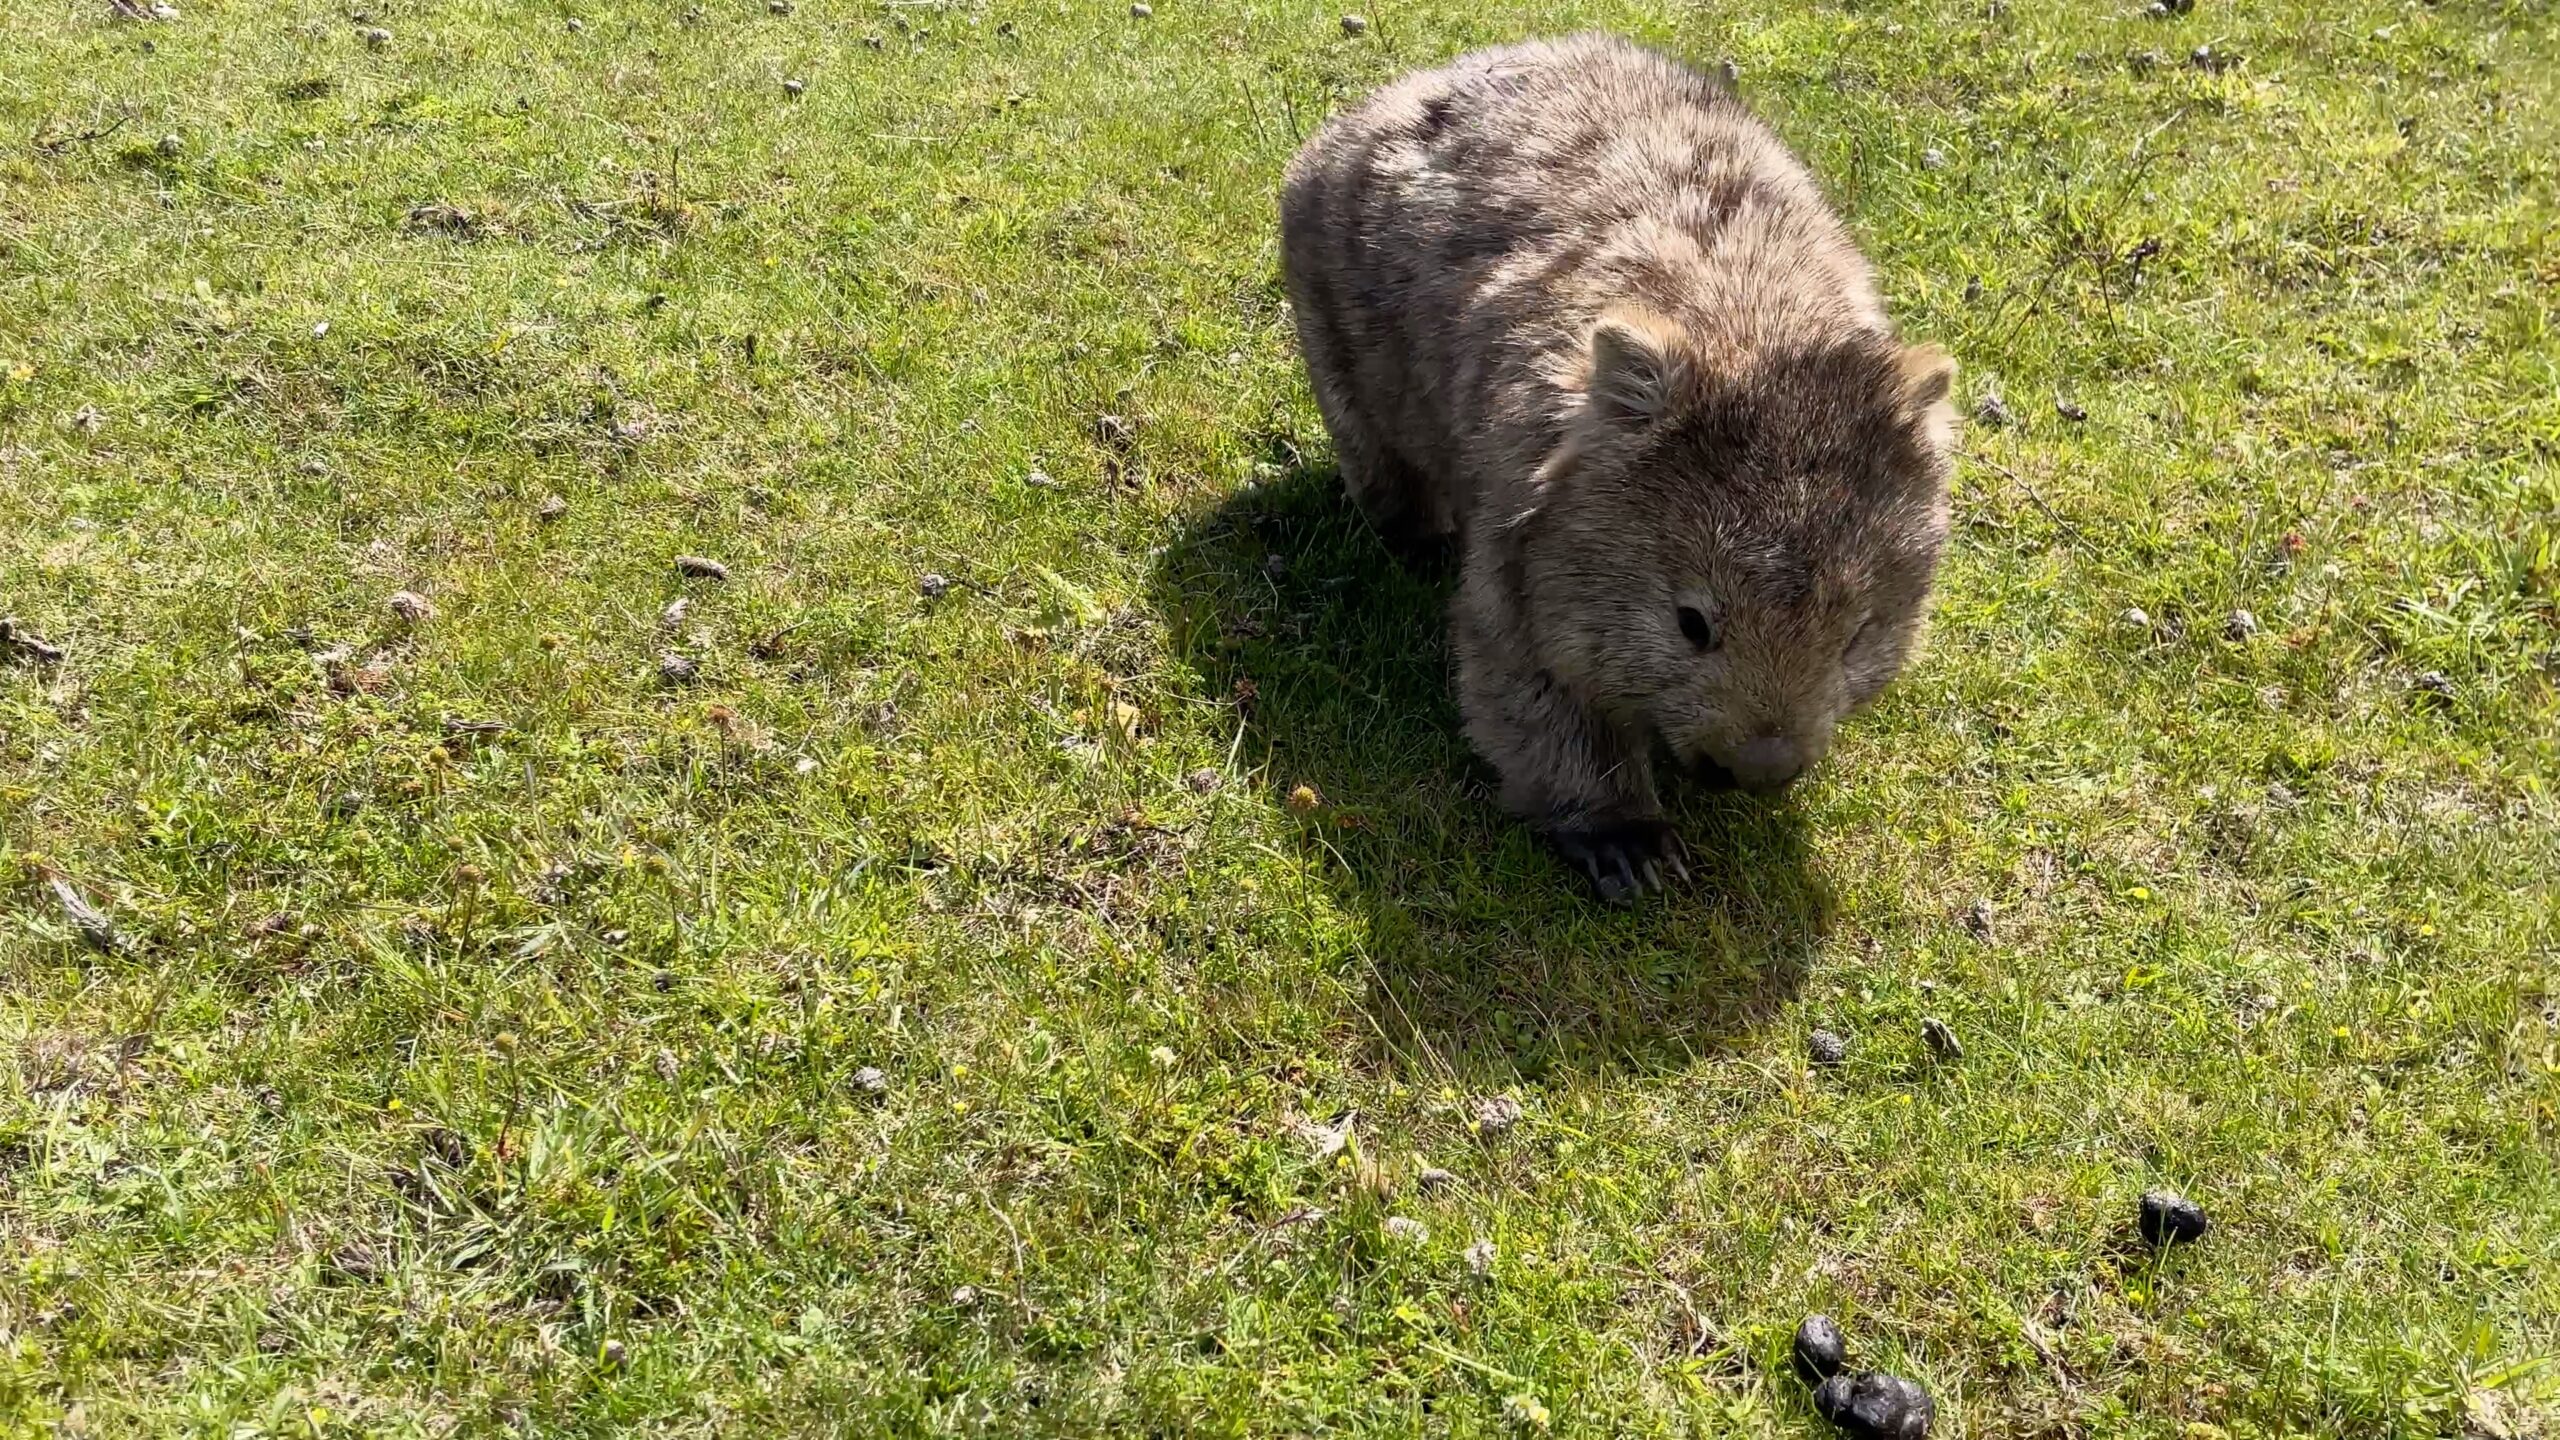 Common wombat walking, Vombatus ursinus 4K UltraHD, UP45033